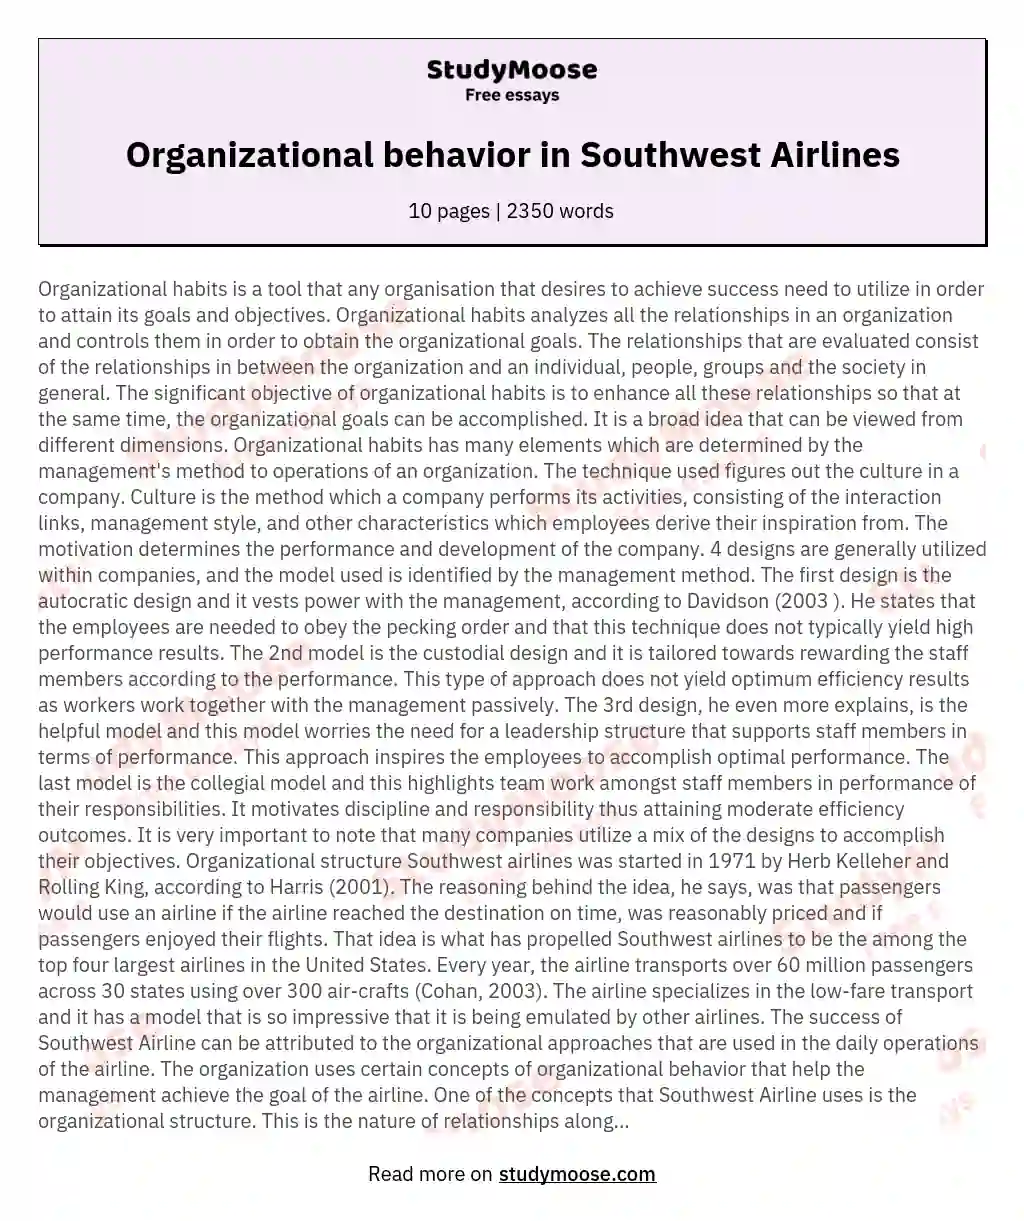 Organizational behavior in Southwest Airlines essay